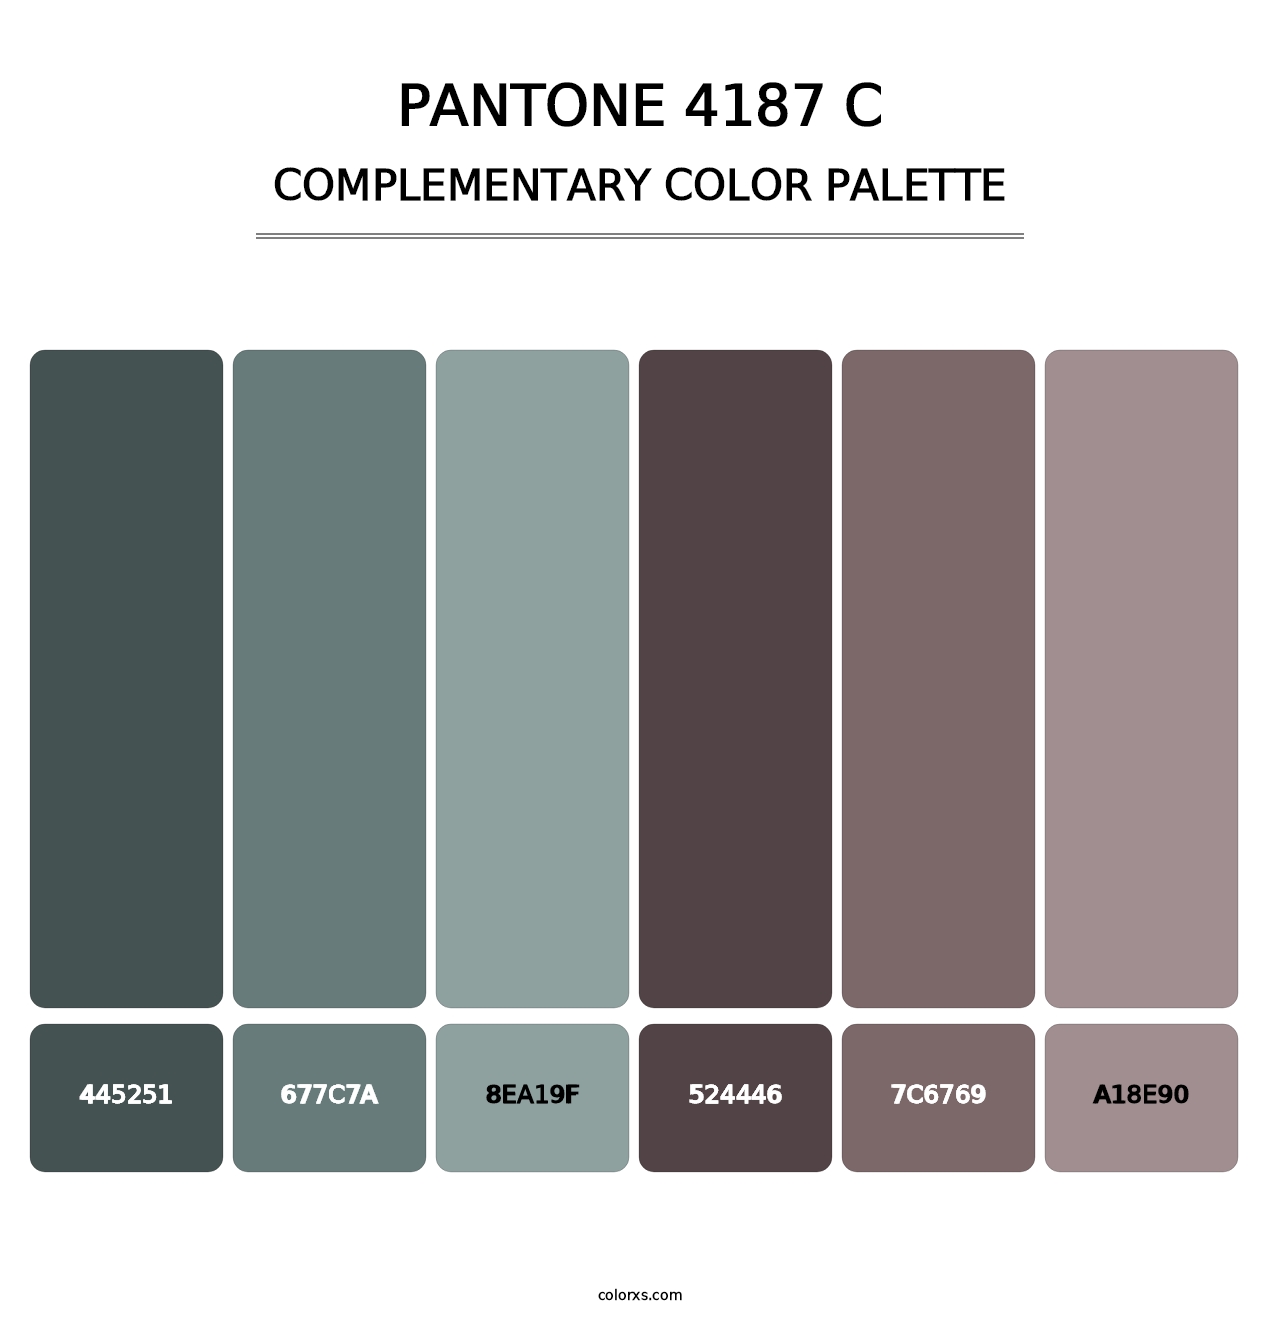 PANTONE 4187 C - Complementary Color Palette